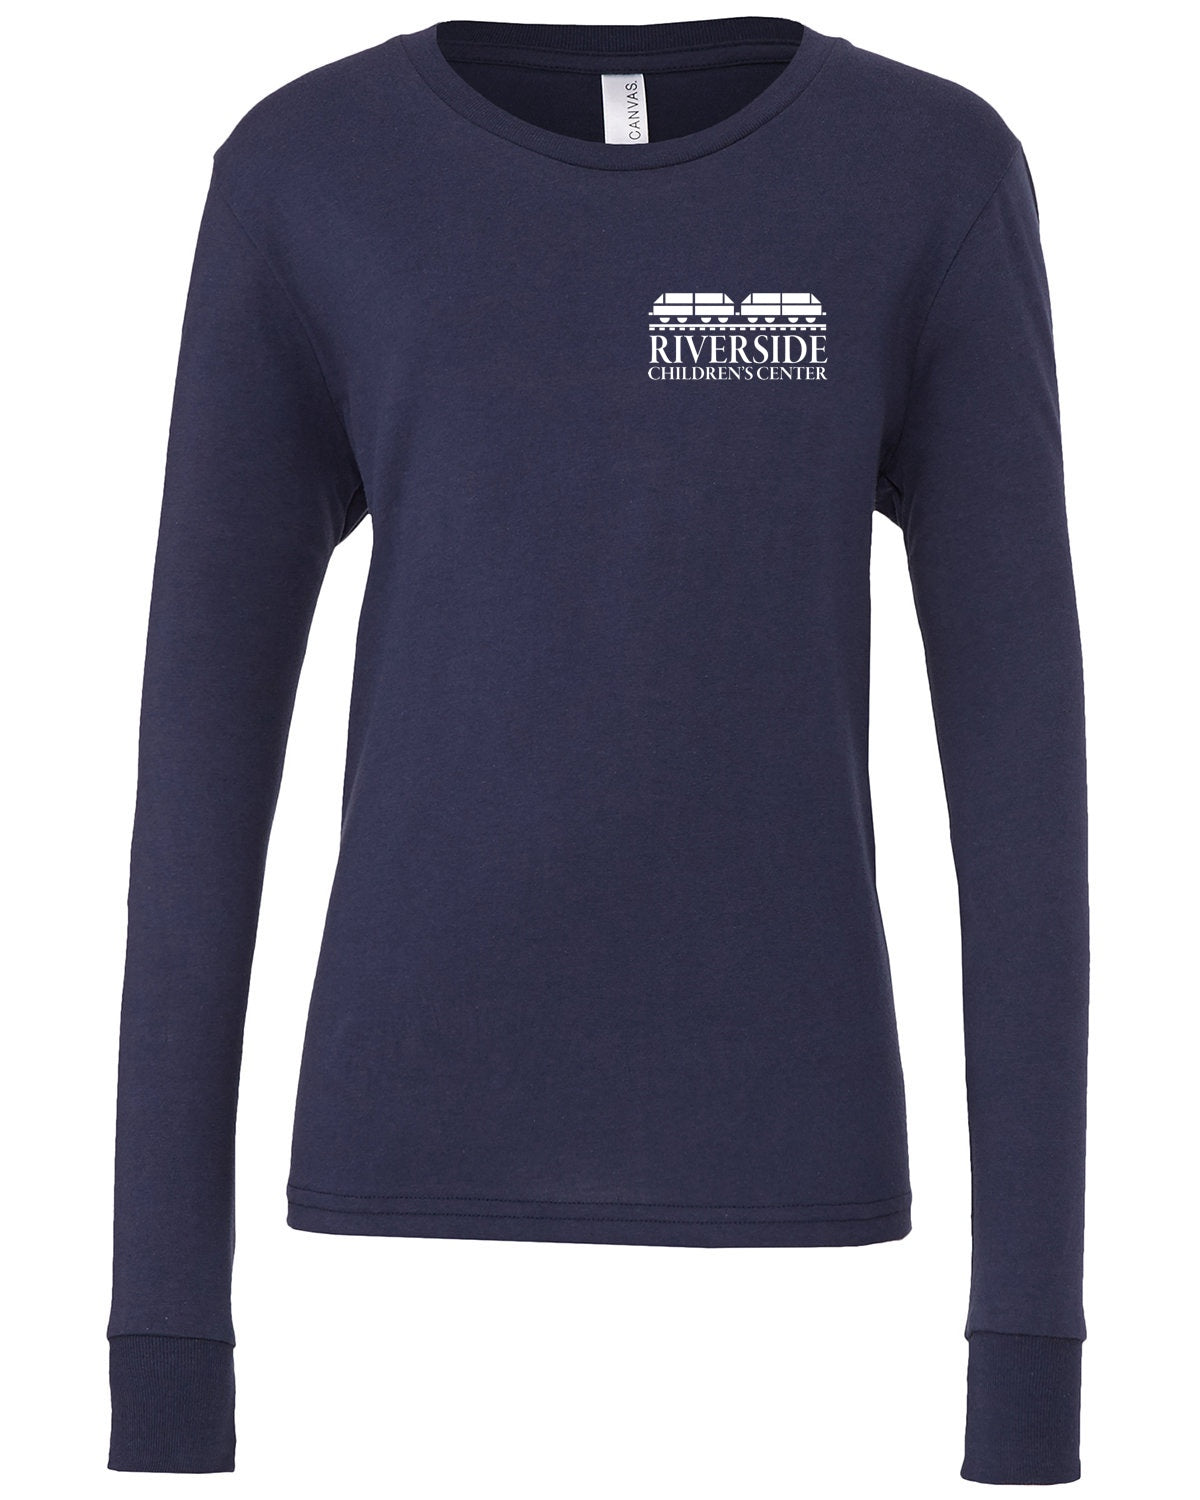 Riverside Youth Long Sleeve T-Shirt (3501Y)